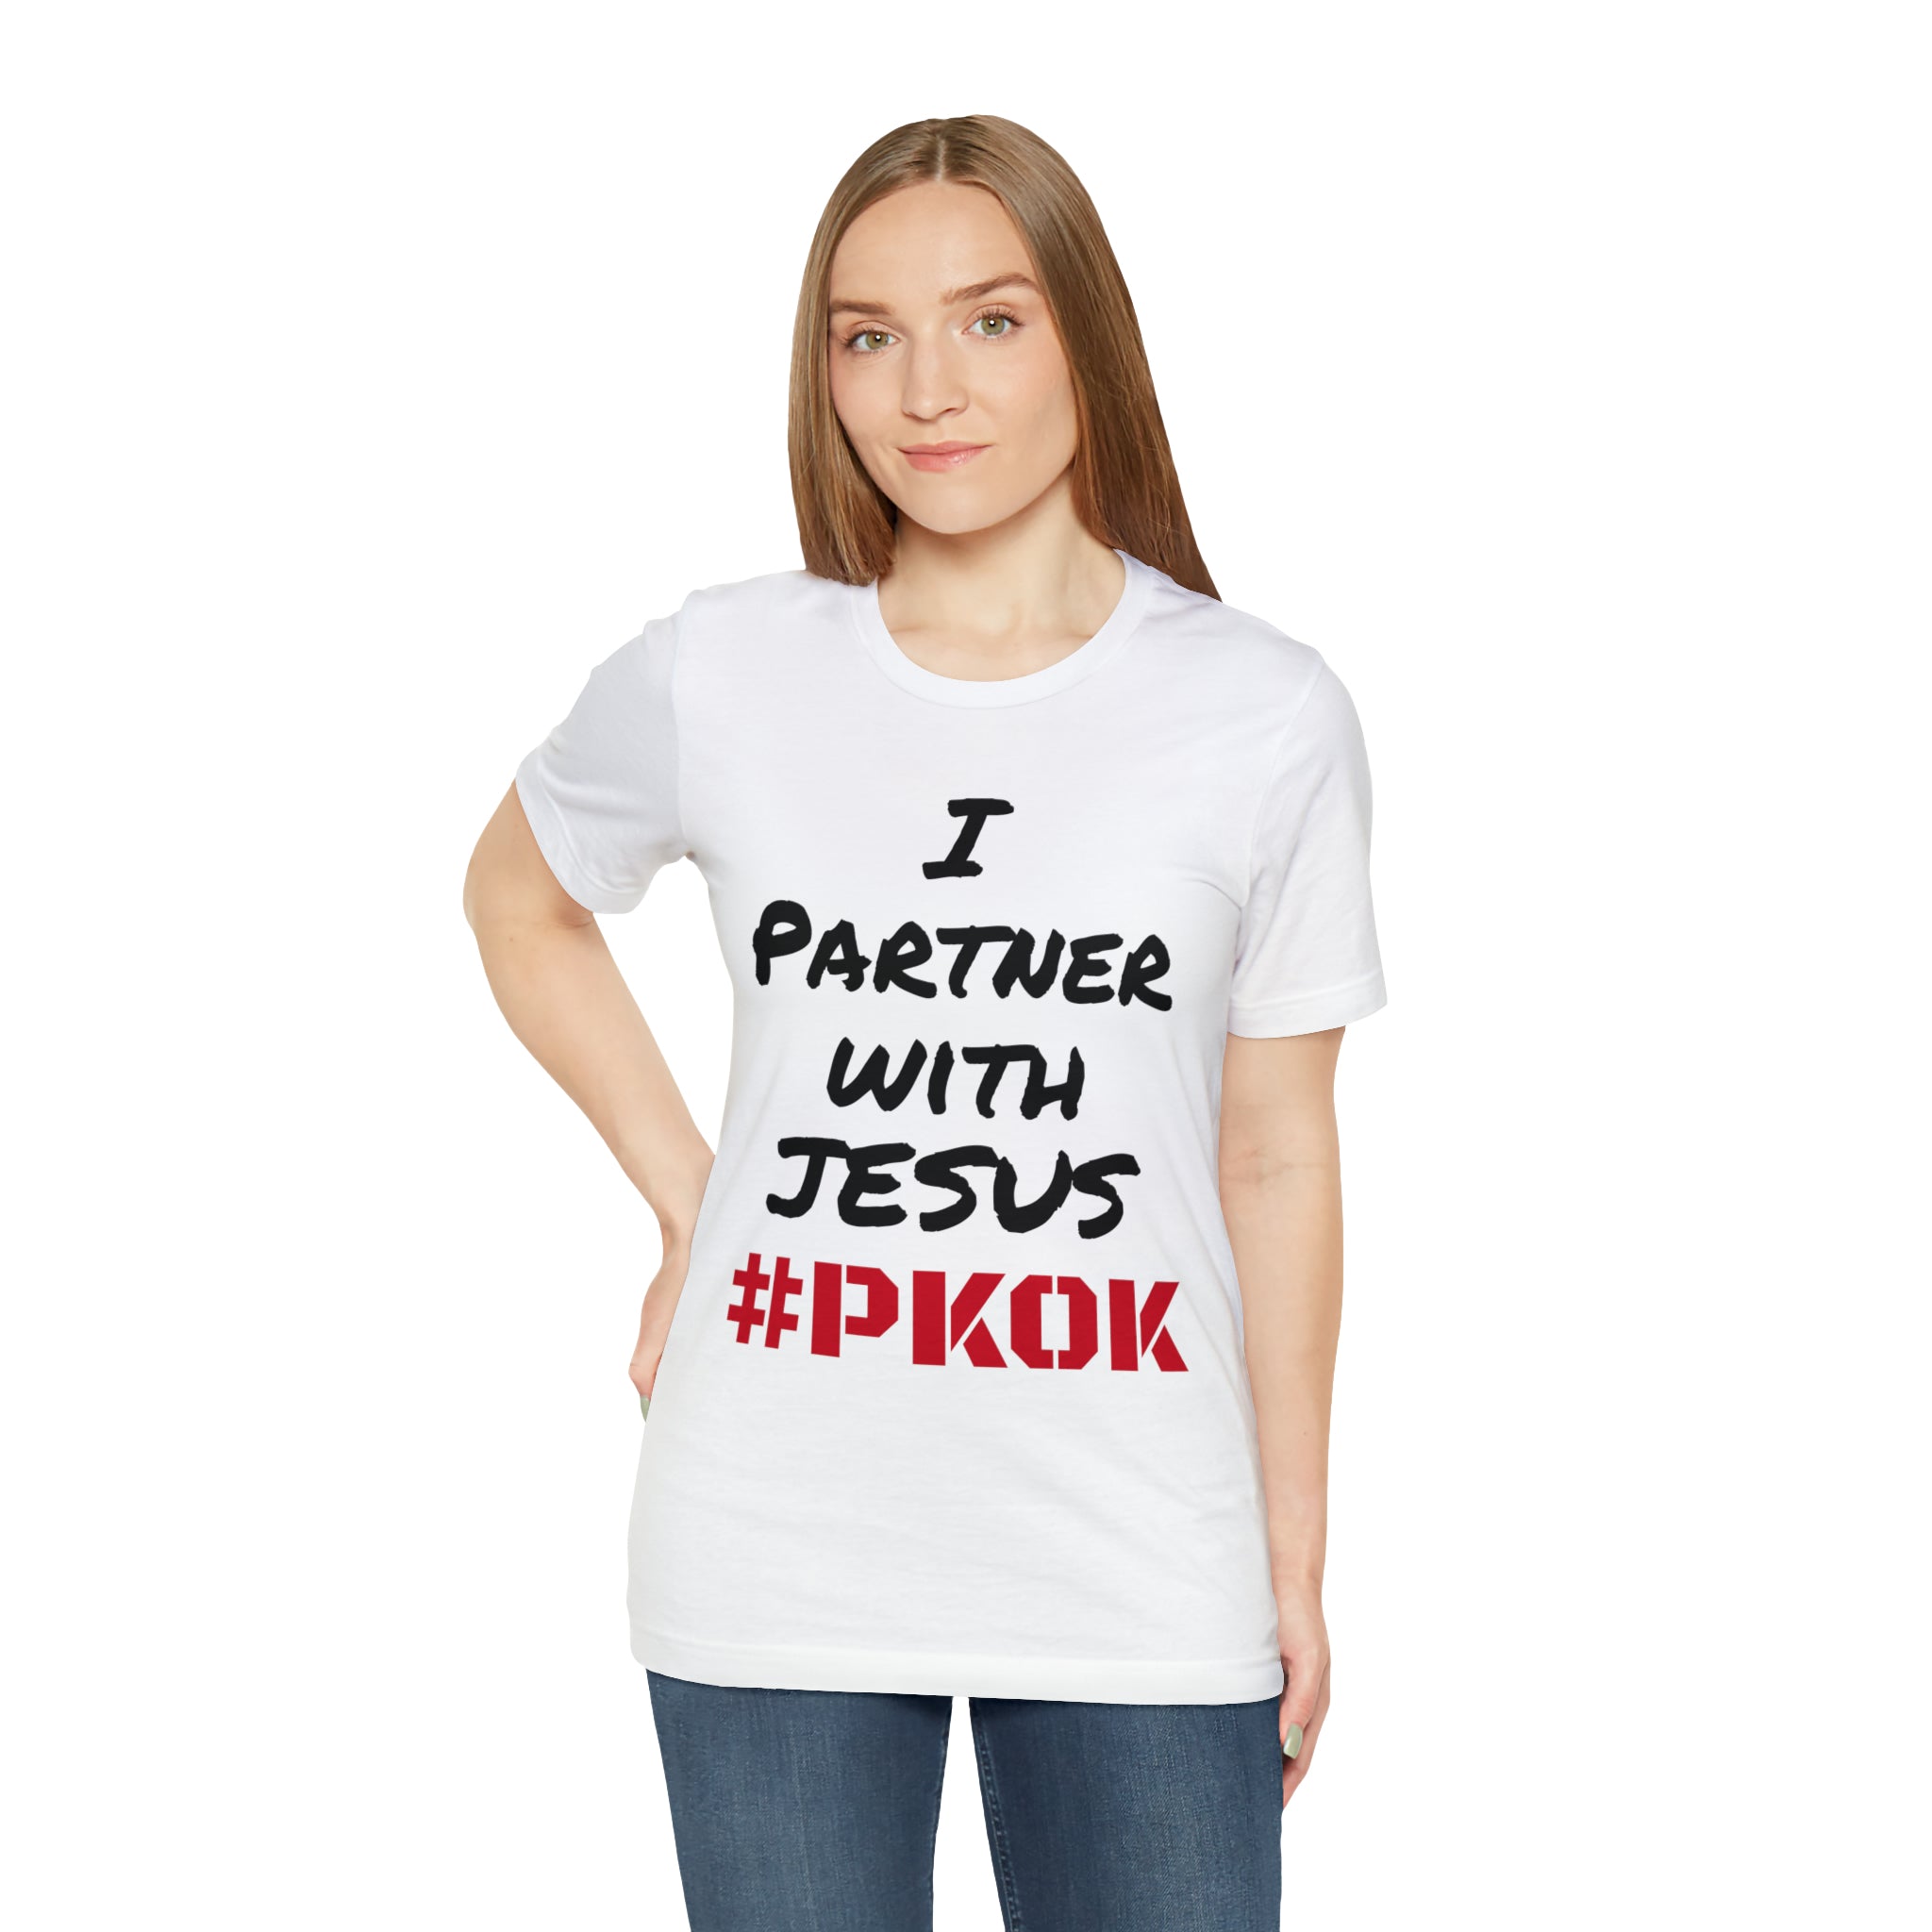 #PKOK #PJ Jersey Short Sleeve Tee